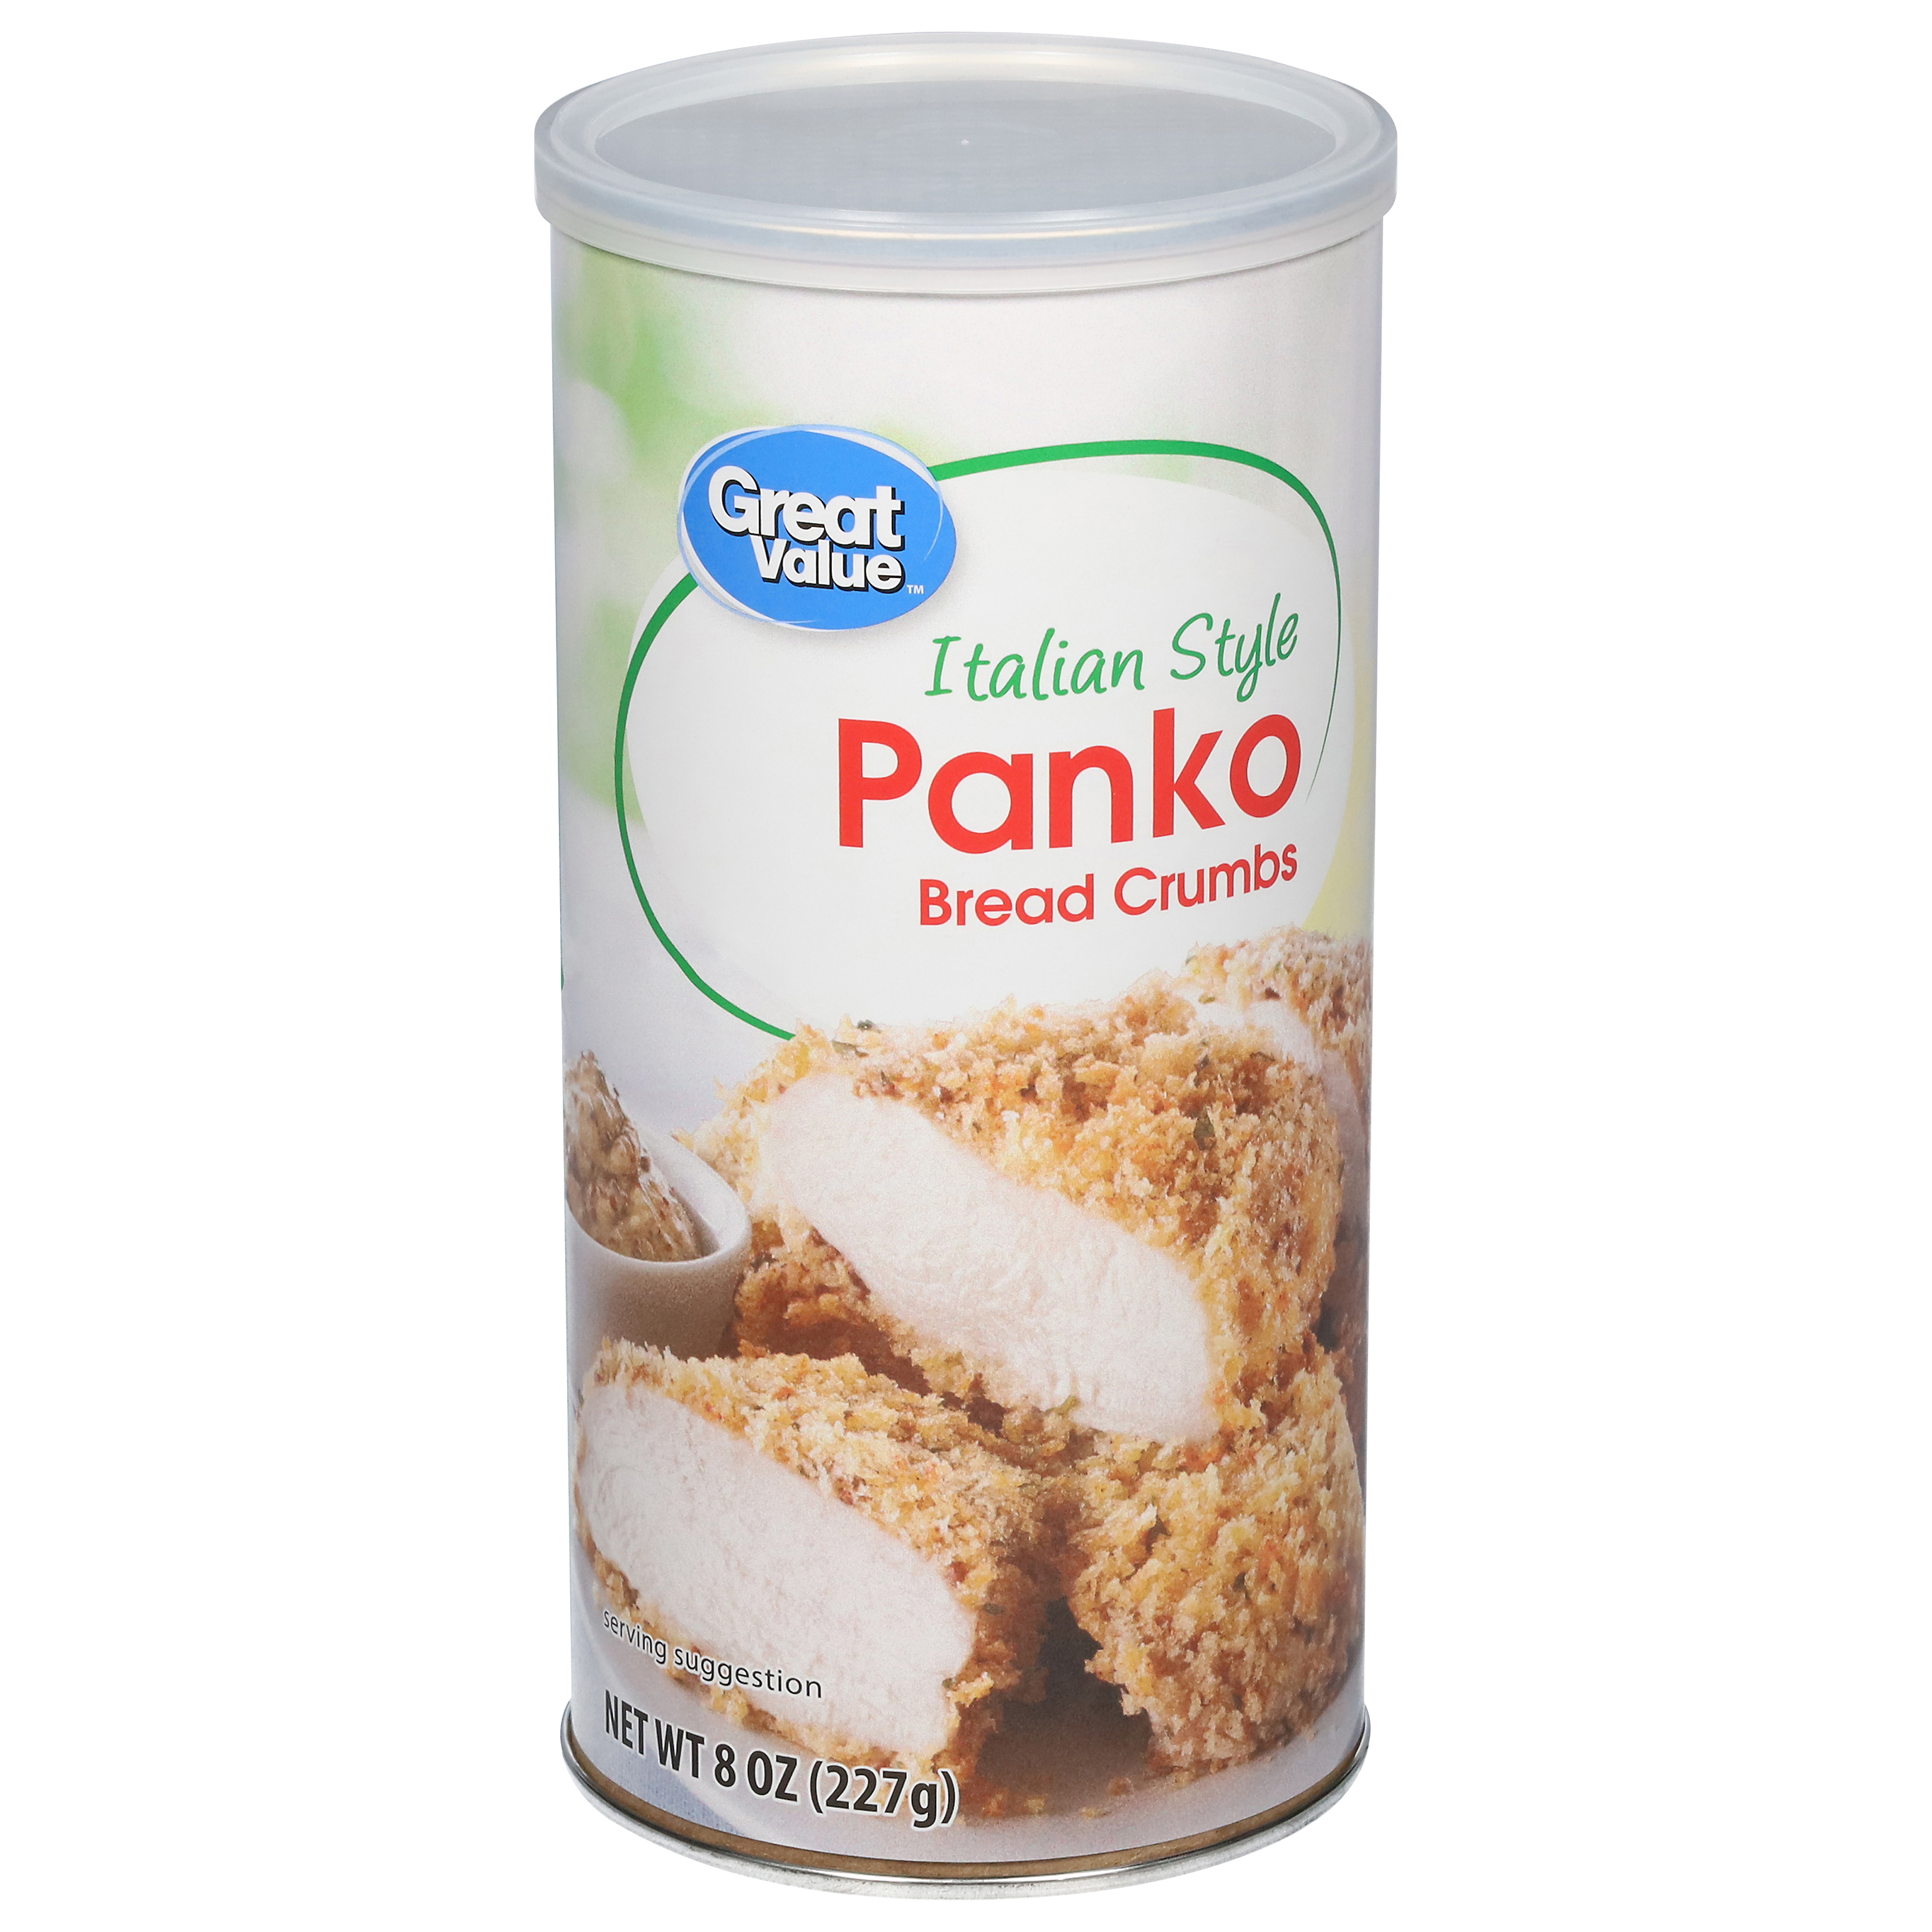 Great Value Italian Style Panko Bread Crumbs, 8 oz - image 1 of 12